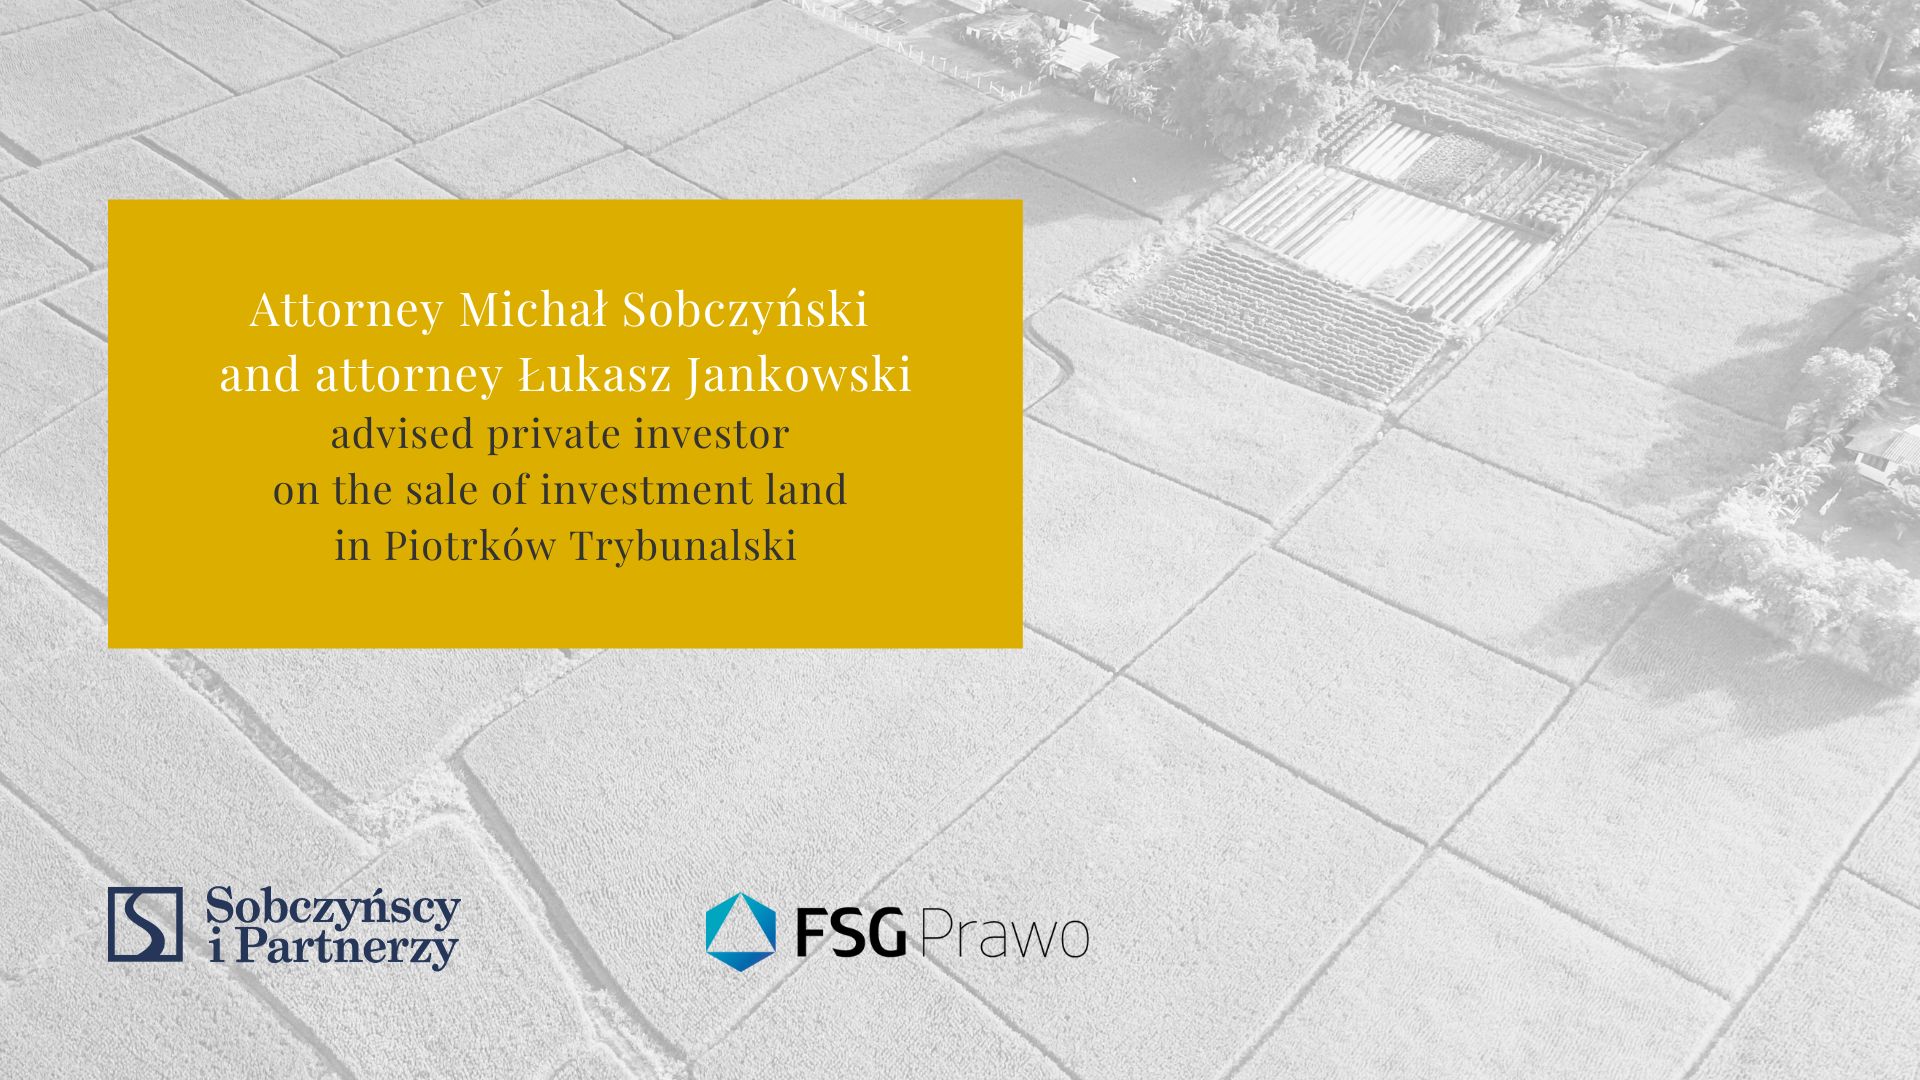 AttorneyMichał Sobczyński 
and attorney Łukasz Jankowski
advised private investor on the sale of investment land in Piotrków Trybunalski